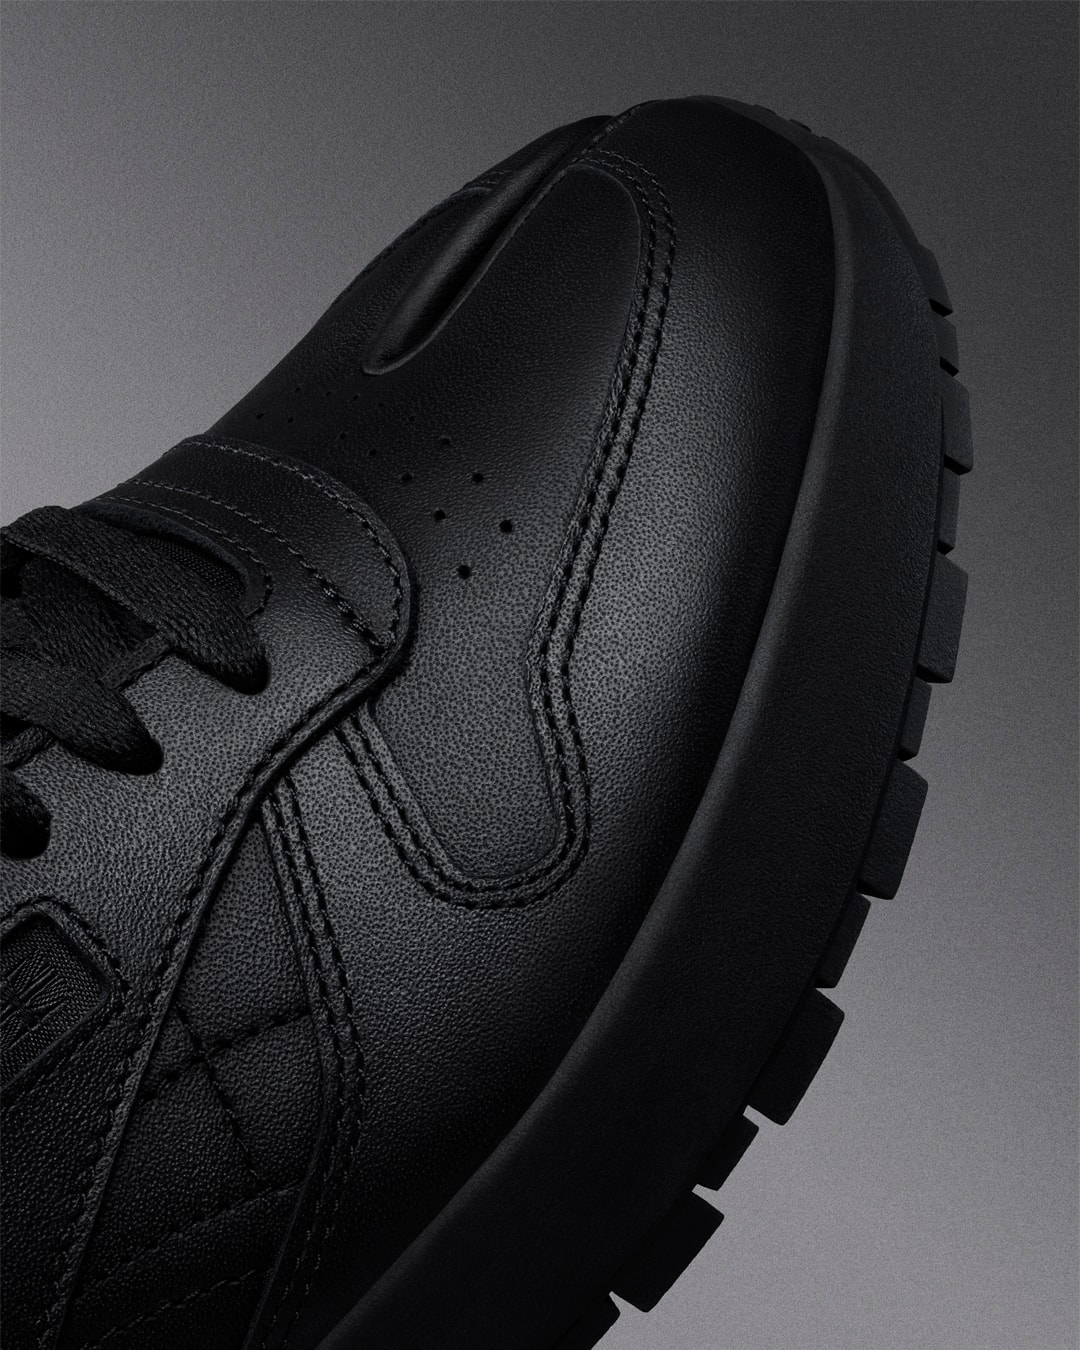 maison margiela reebok classic leather tabi toe sneakers collaboration black details